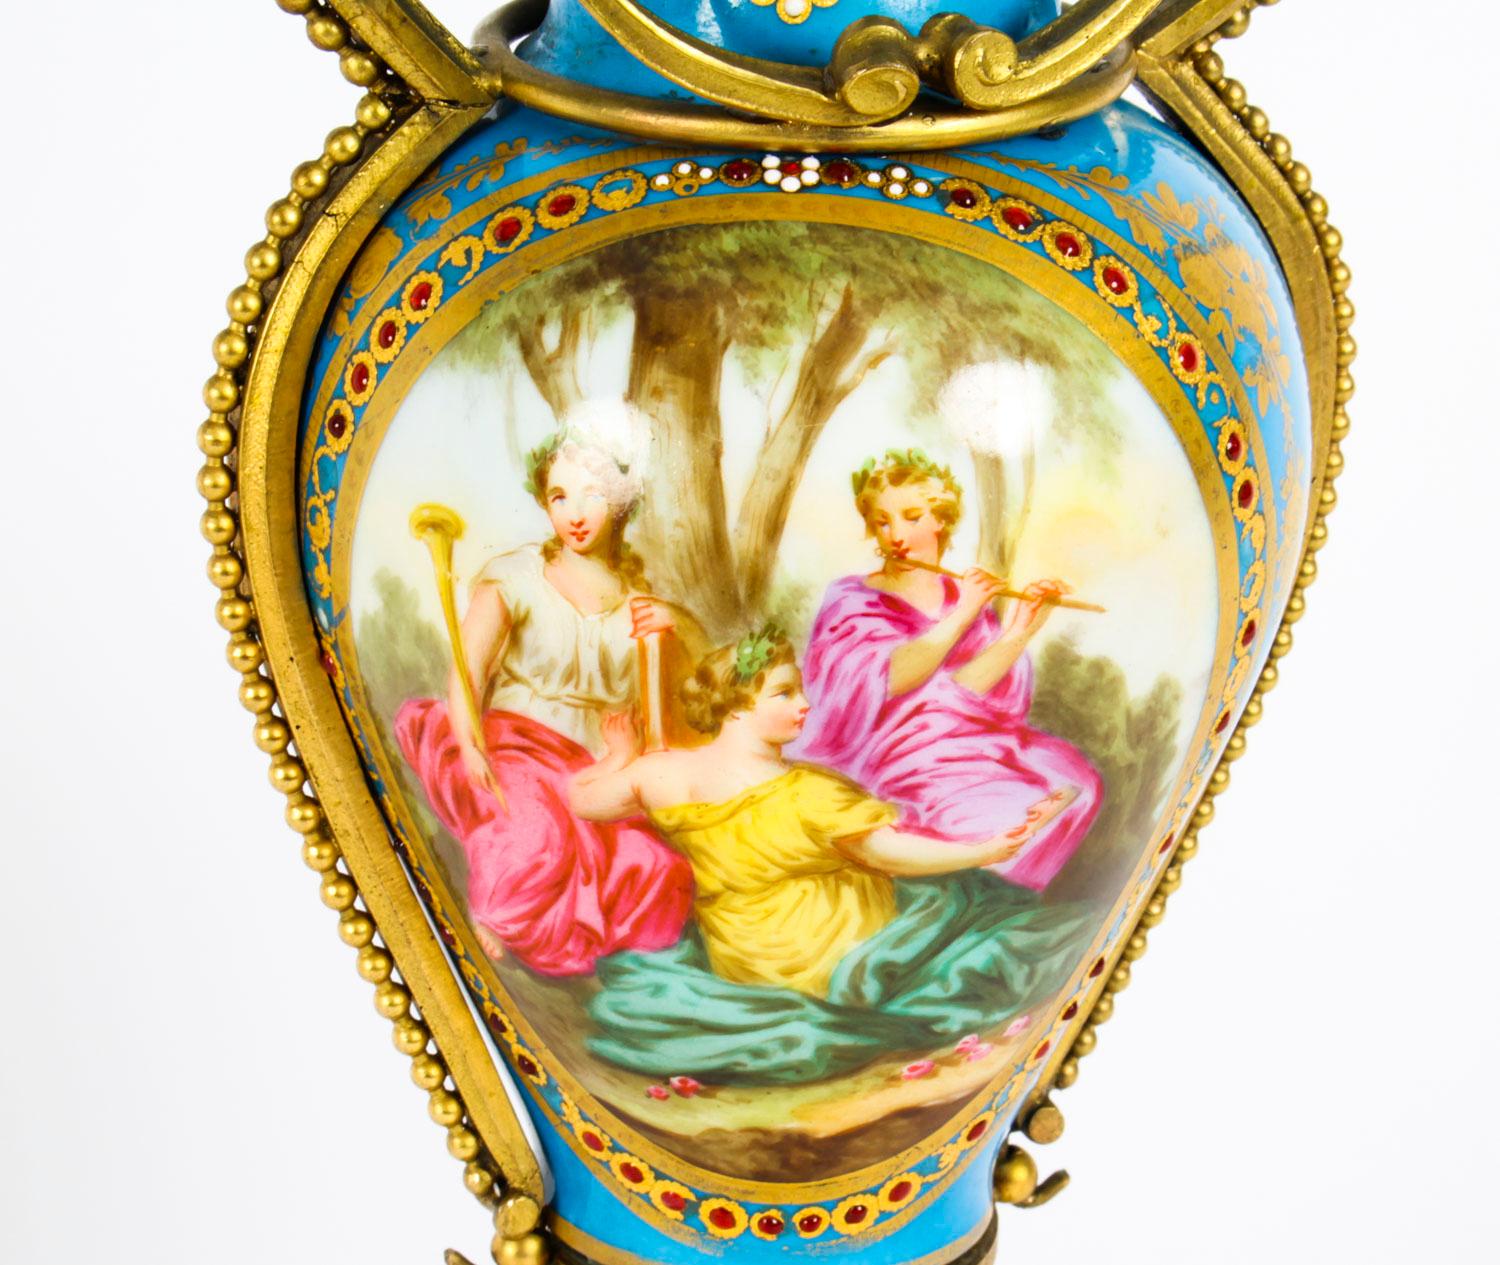 Porcelain Antique Pair of French Ormolu Mounted Bleu Celeste Sèvres Vases, 19th Century For Sale